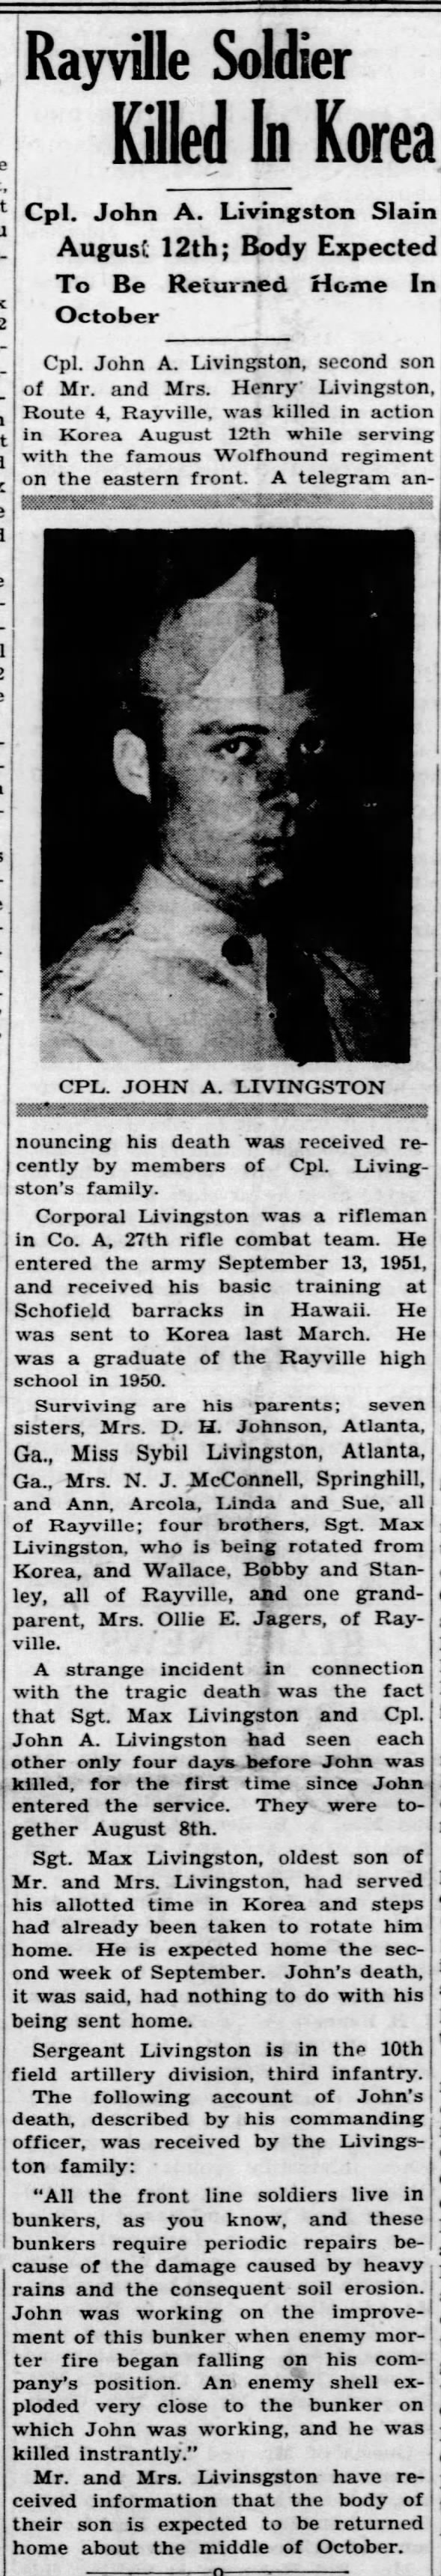 Cpl. John A. Livingston, Korean War